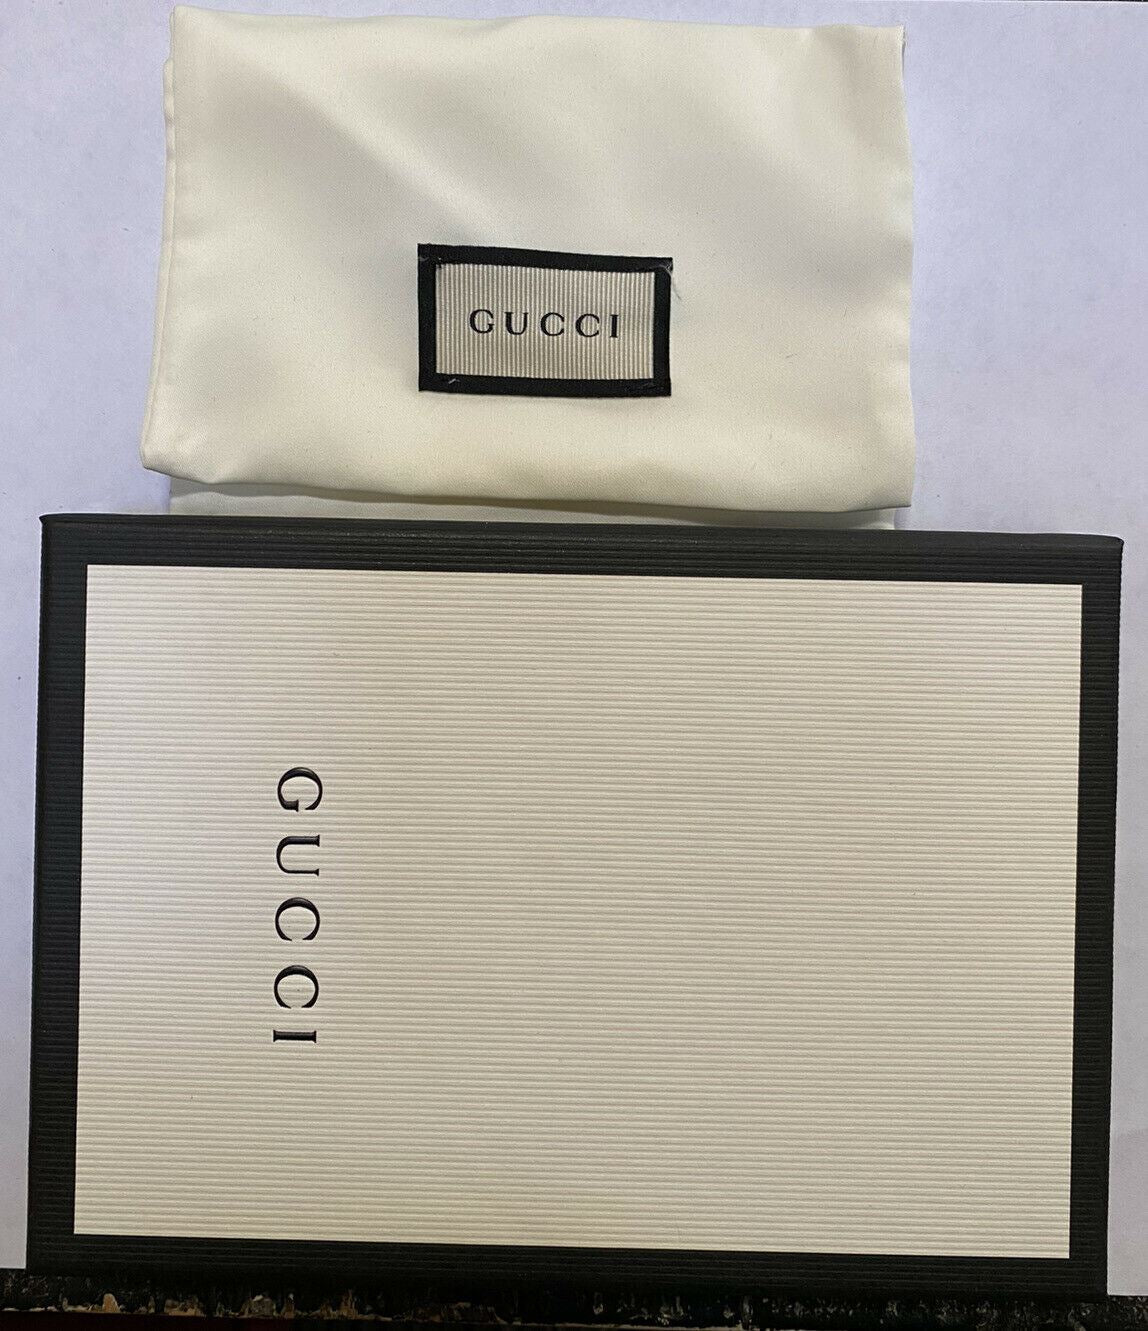 NWB $790 Gucci Jeweled Pear Mono Drop Earring